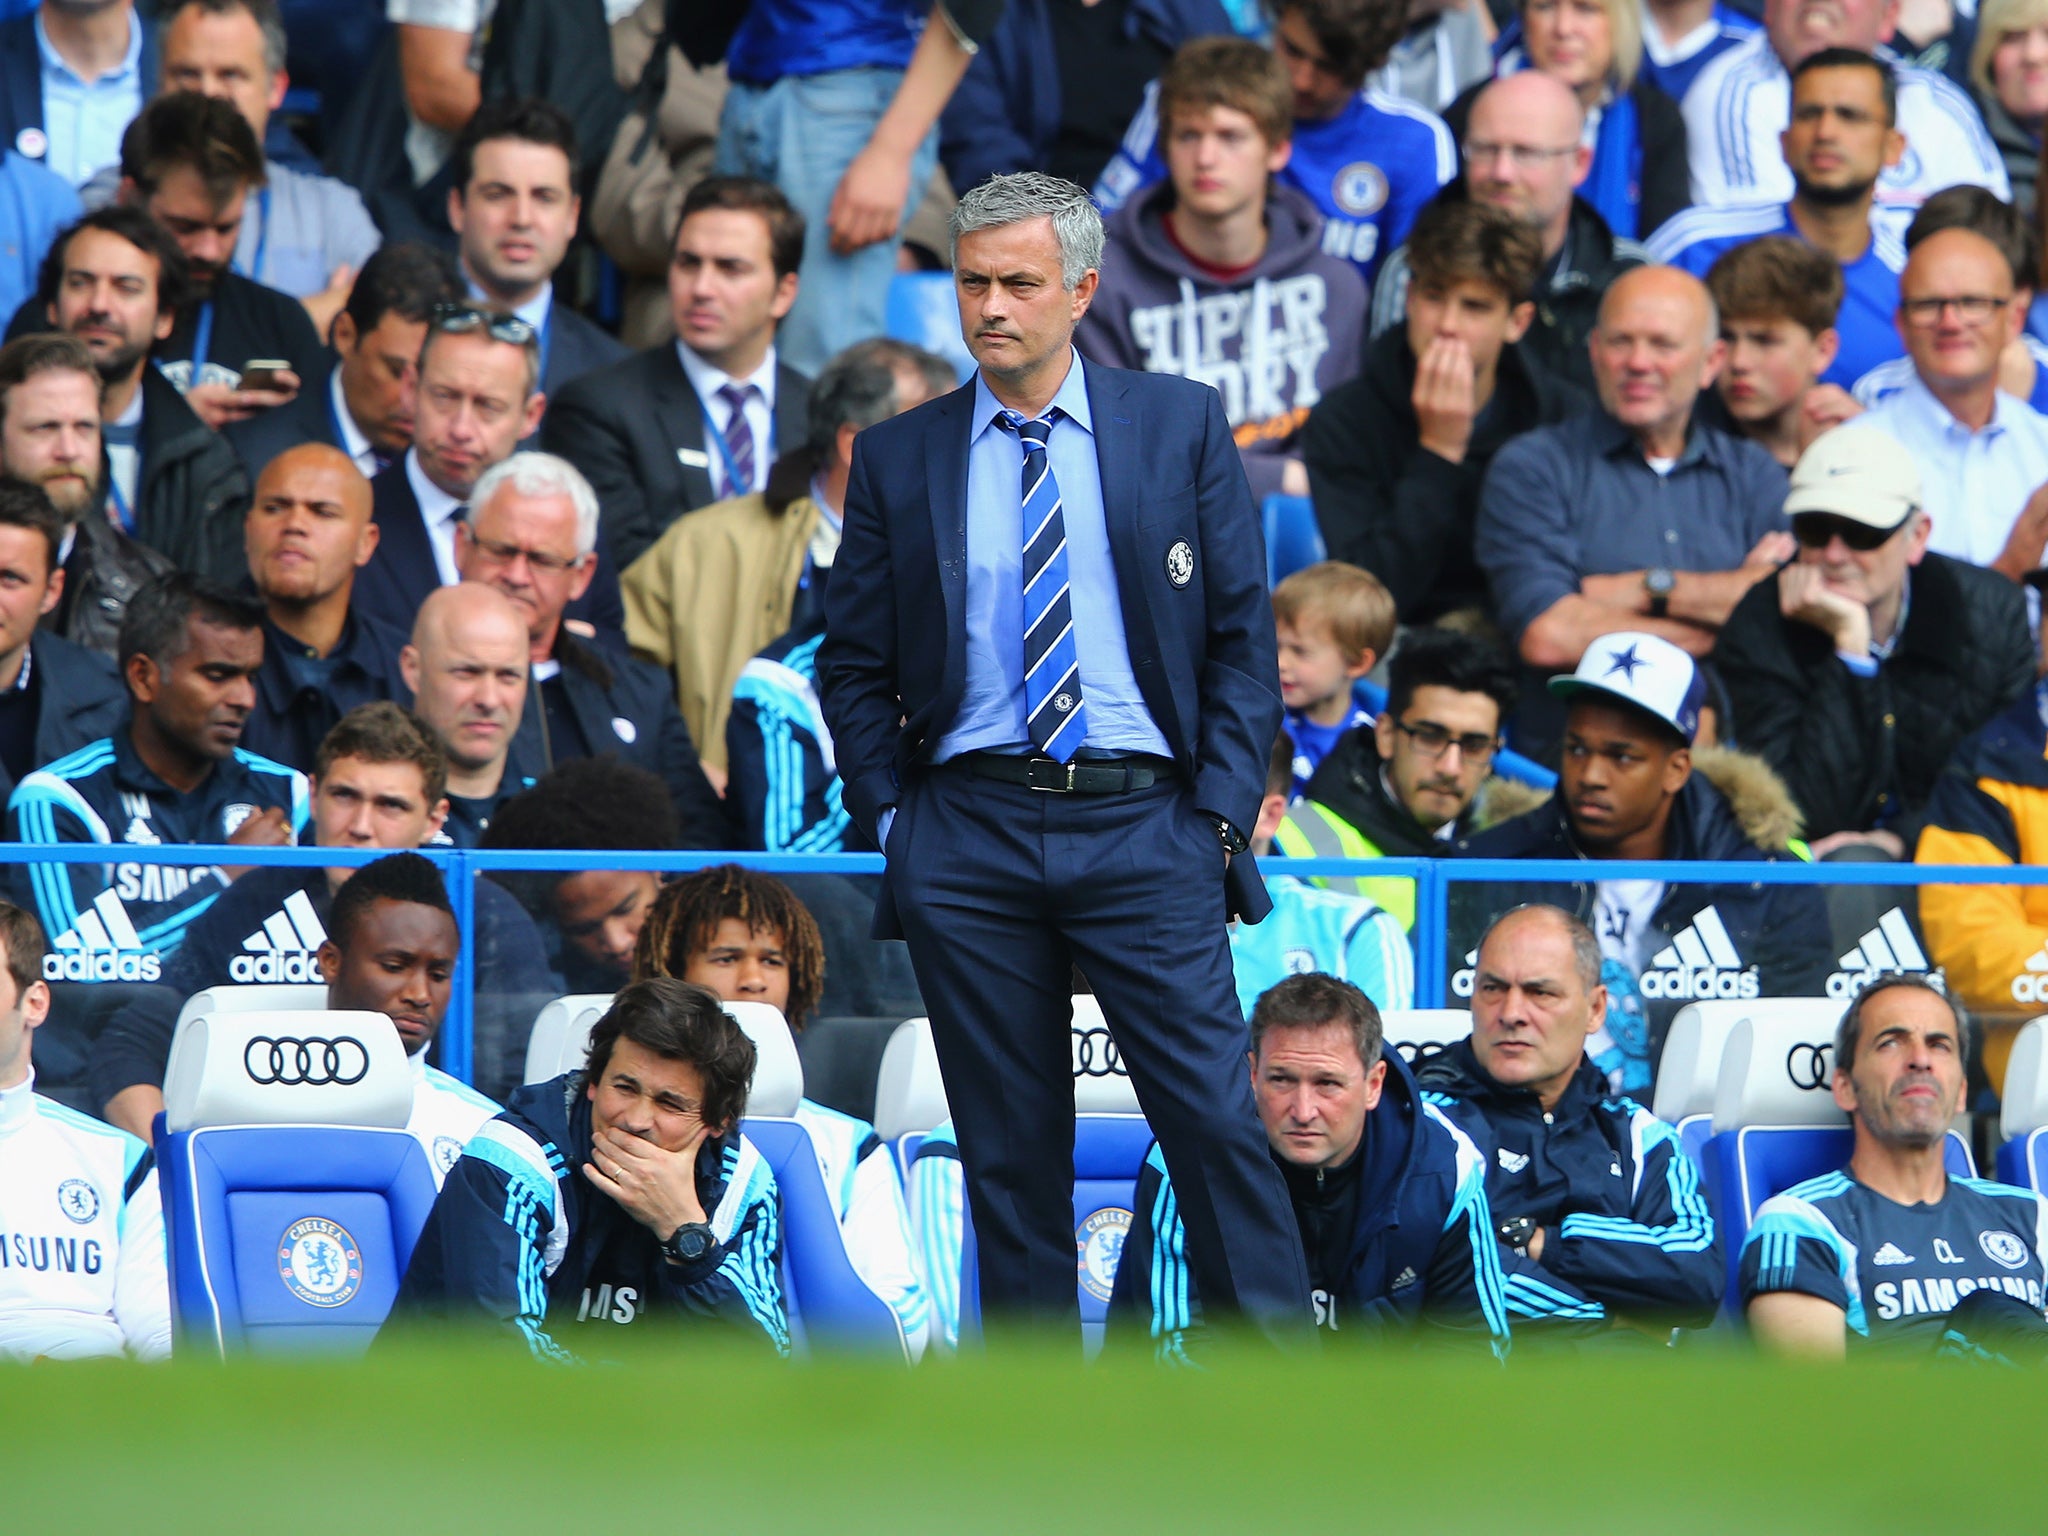 Jose Mourinho's Chelsea cruised to the title this season